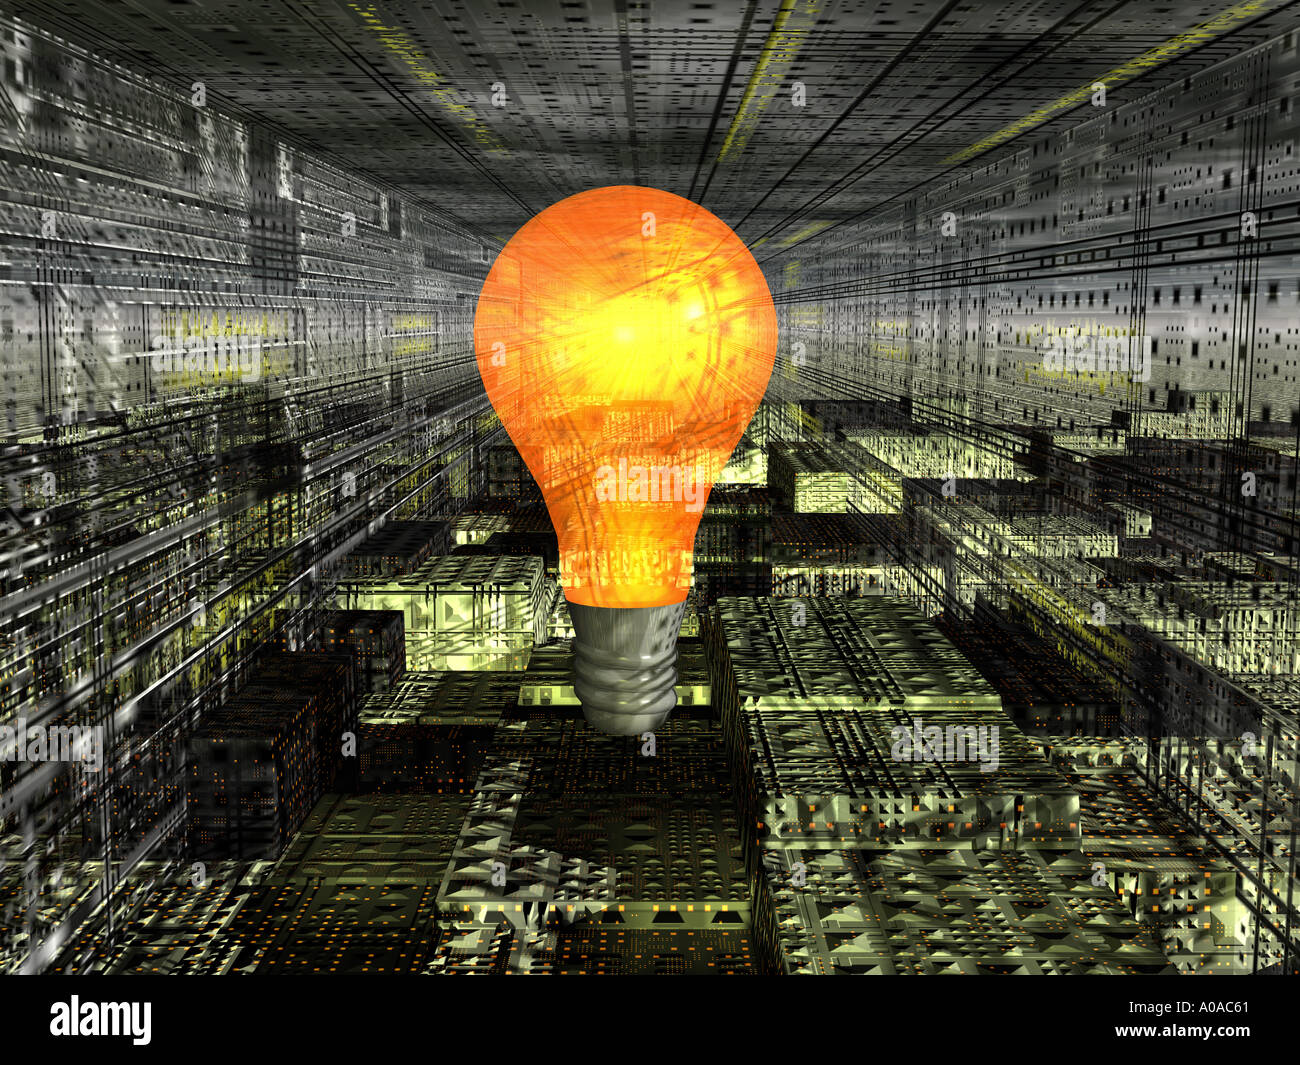 light bulb in industrial sci fi setting Stock Photo